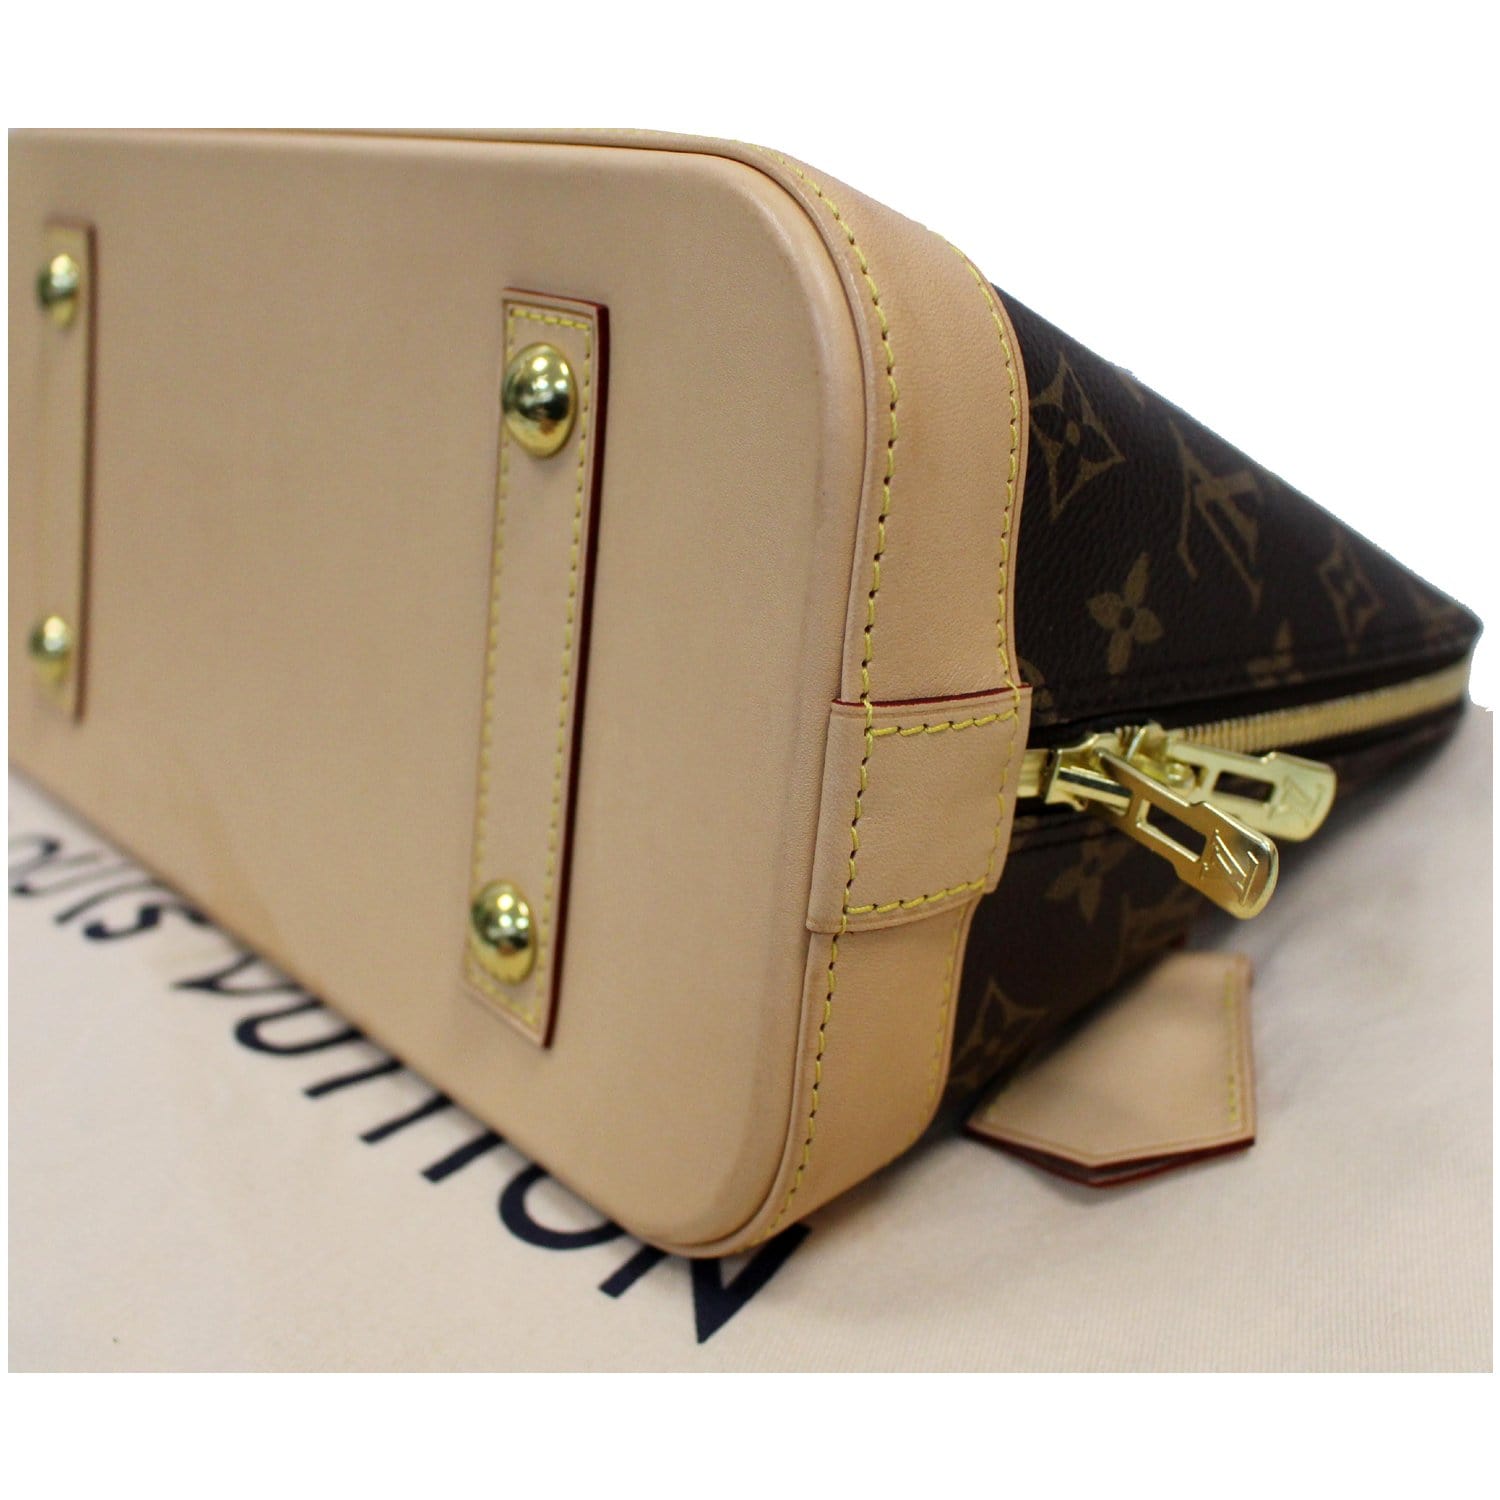 Louis Vuitton LV Monogram Alma PM Handbag Browns Canvas Bag - EXCELLENT